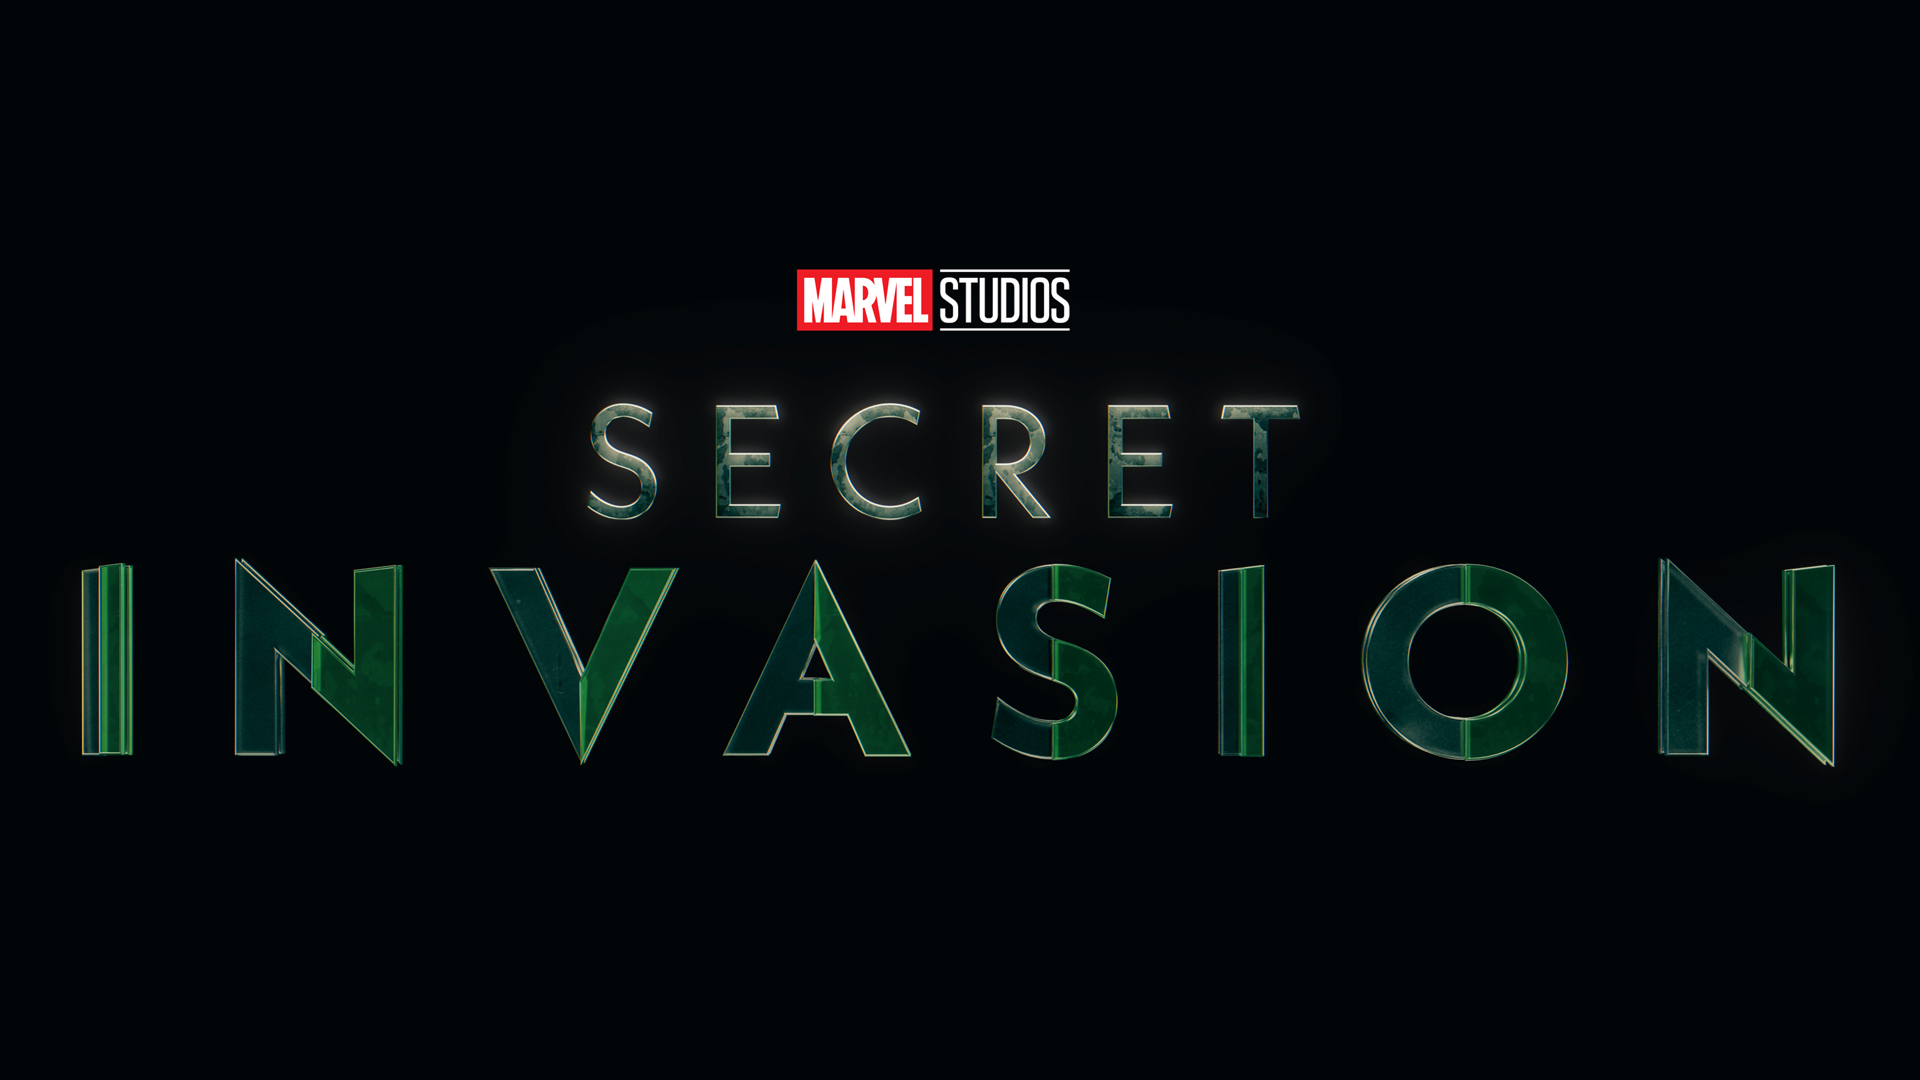 A screenshot of the updated logo for Marvel Studios' Secret Invasion Disney Plus series